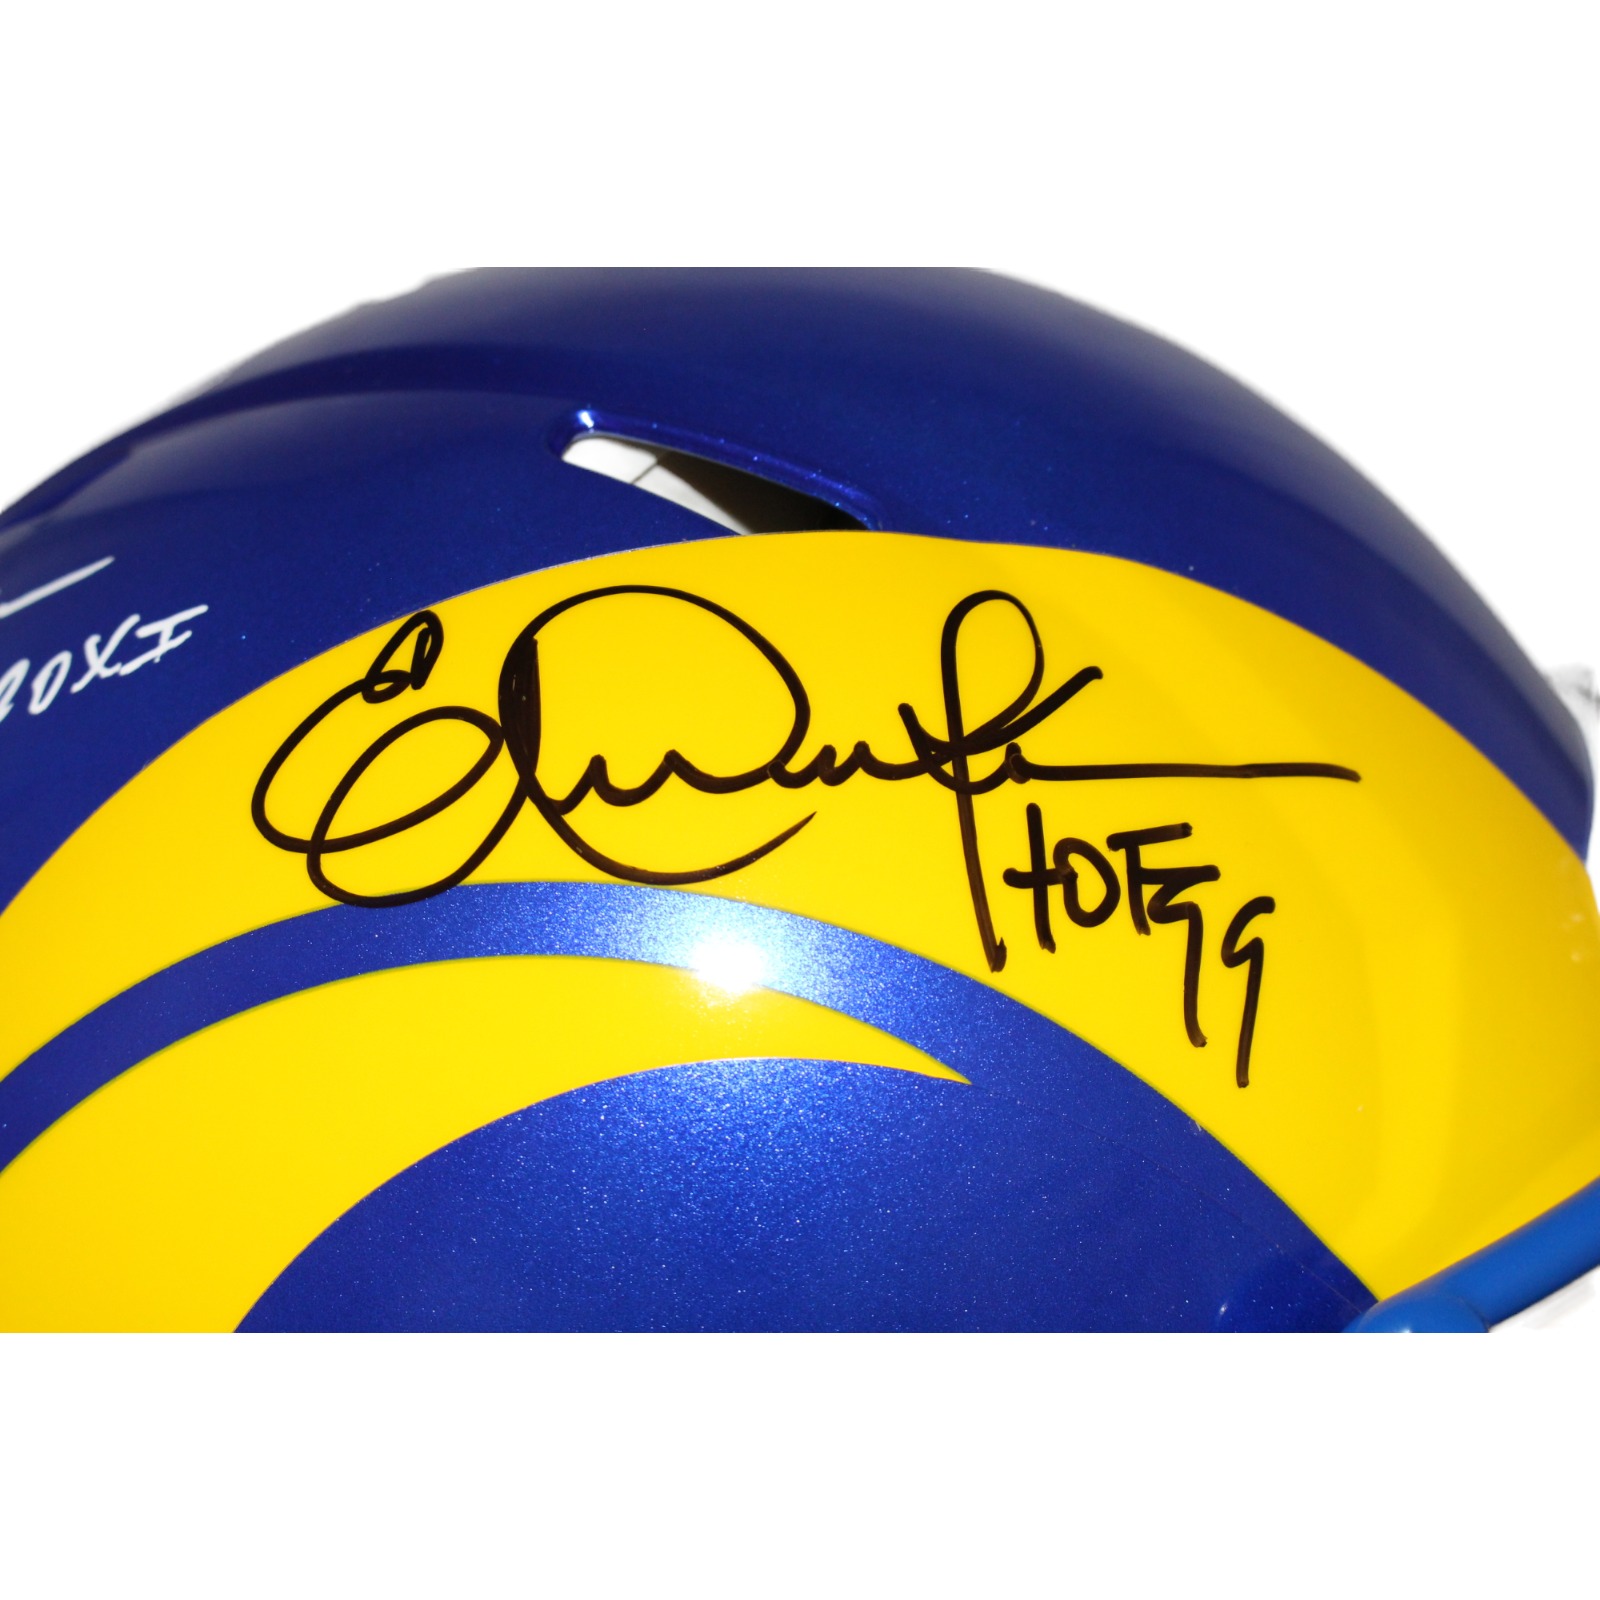 Eric Dickerson Marshall Faulk Signed LA Rams Authentic Helmet HOF BAS